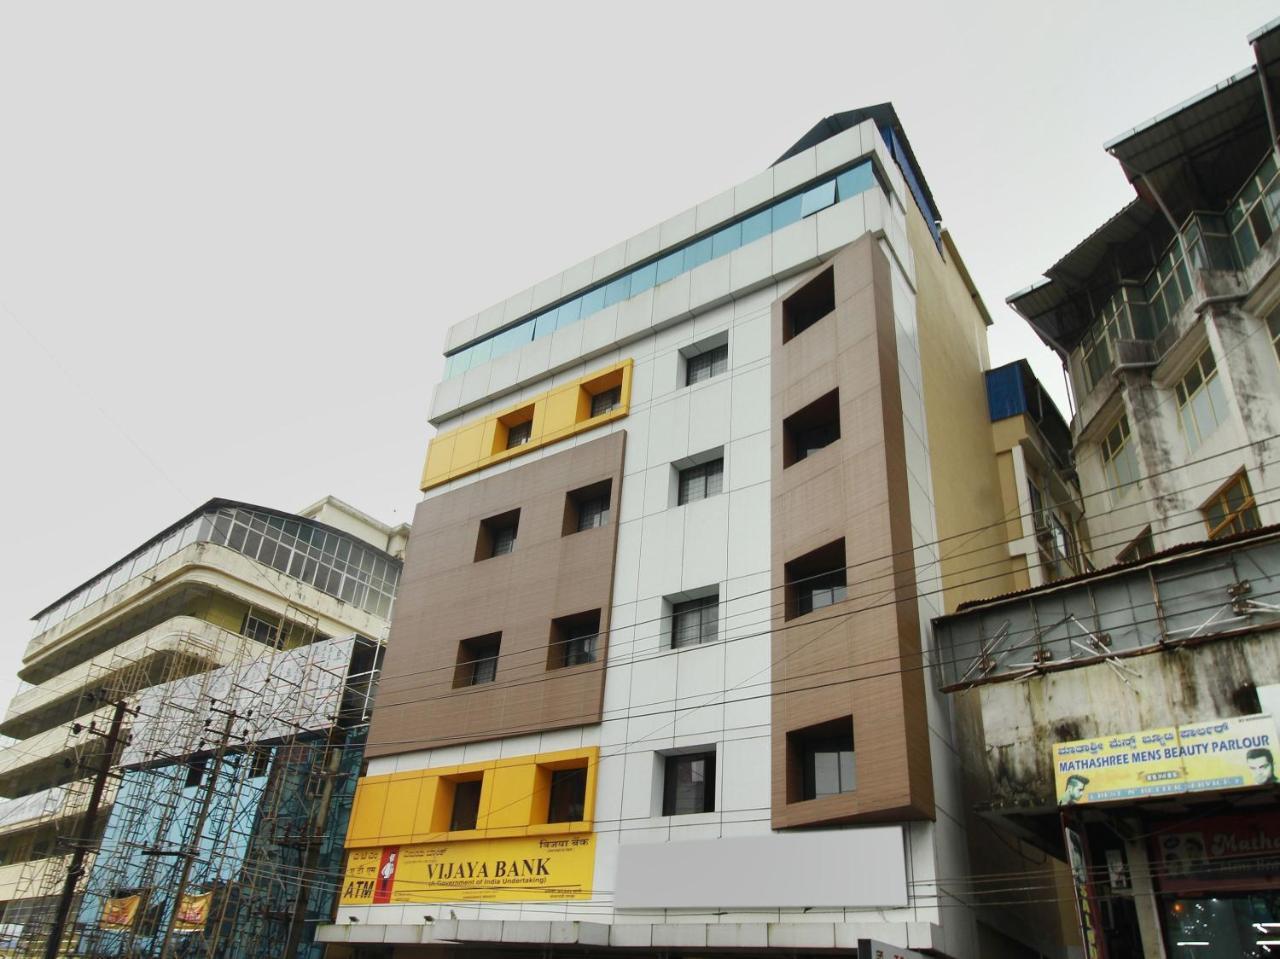 Traders Hotel - Kankanady, Mangalore Exterior photo